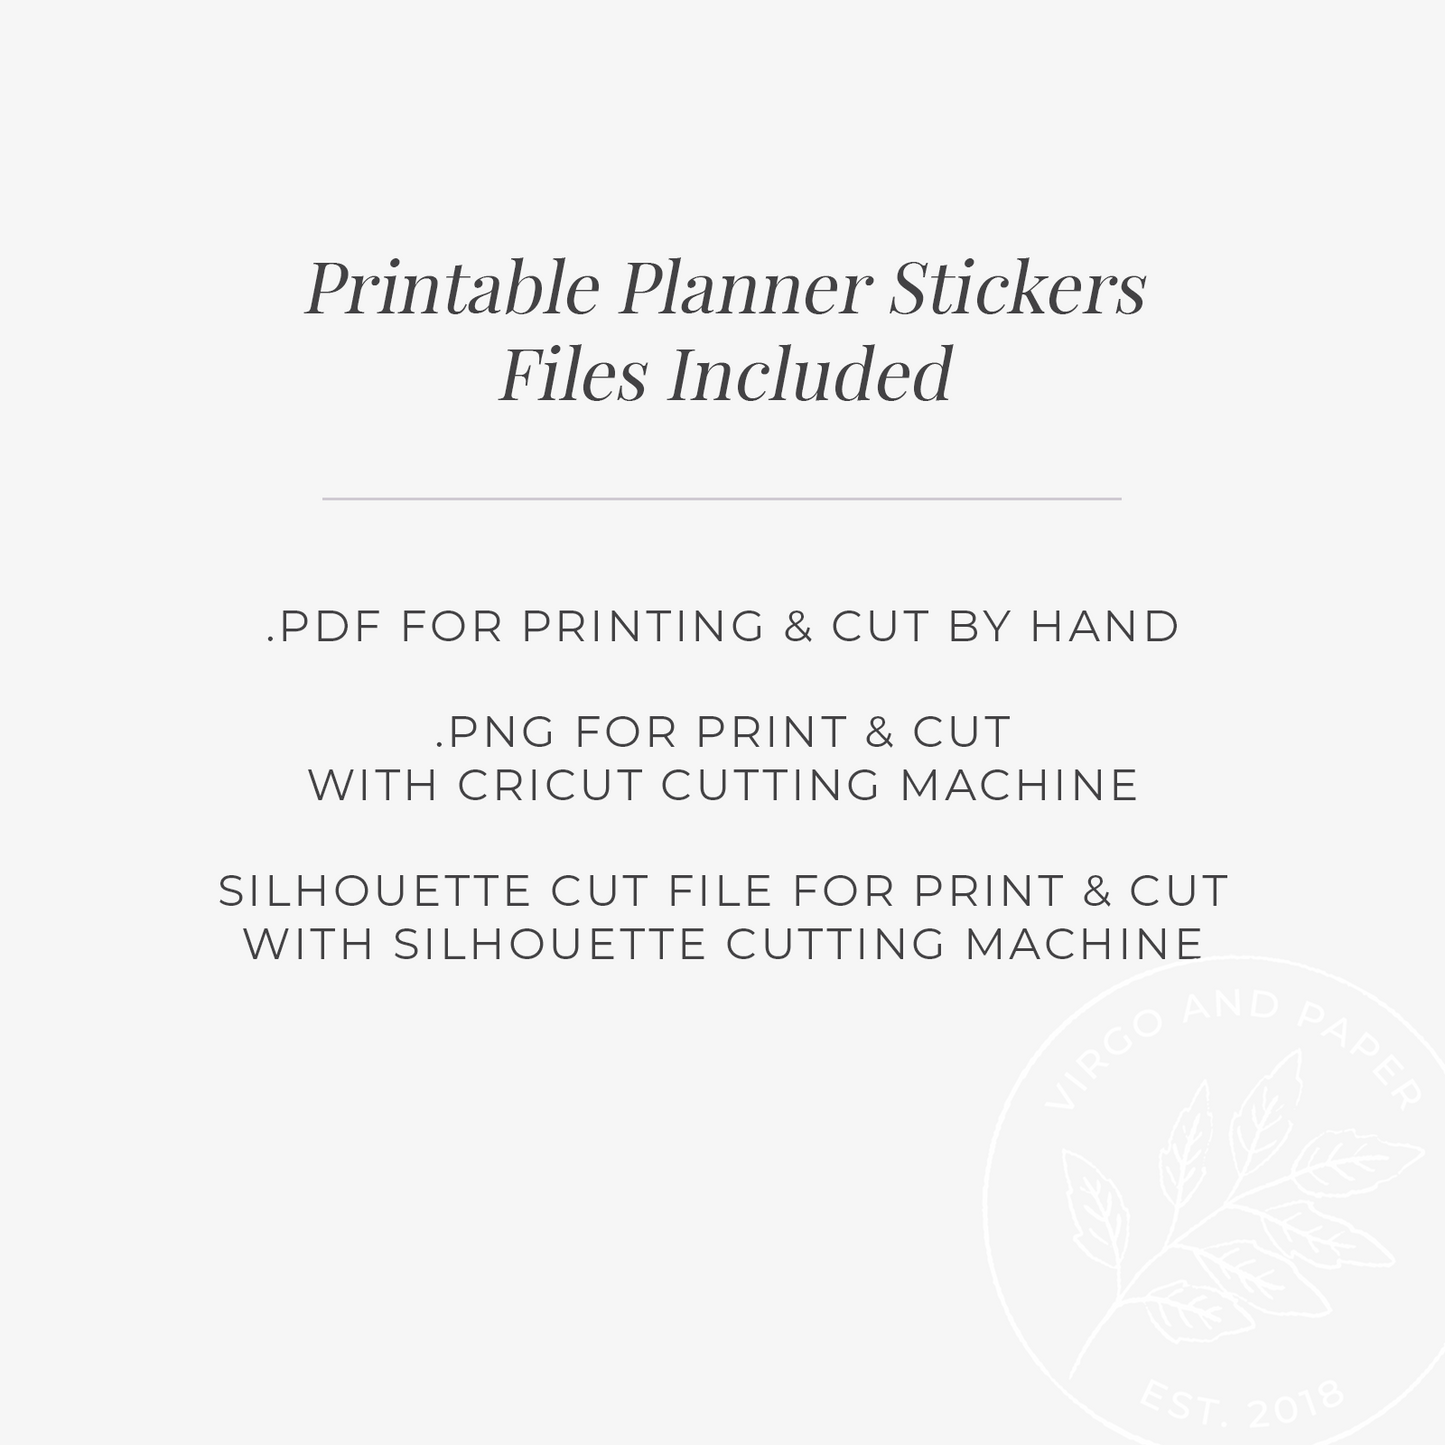 Printable Journaling Stickers - Luna